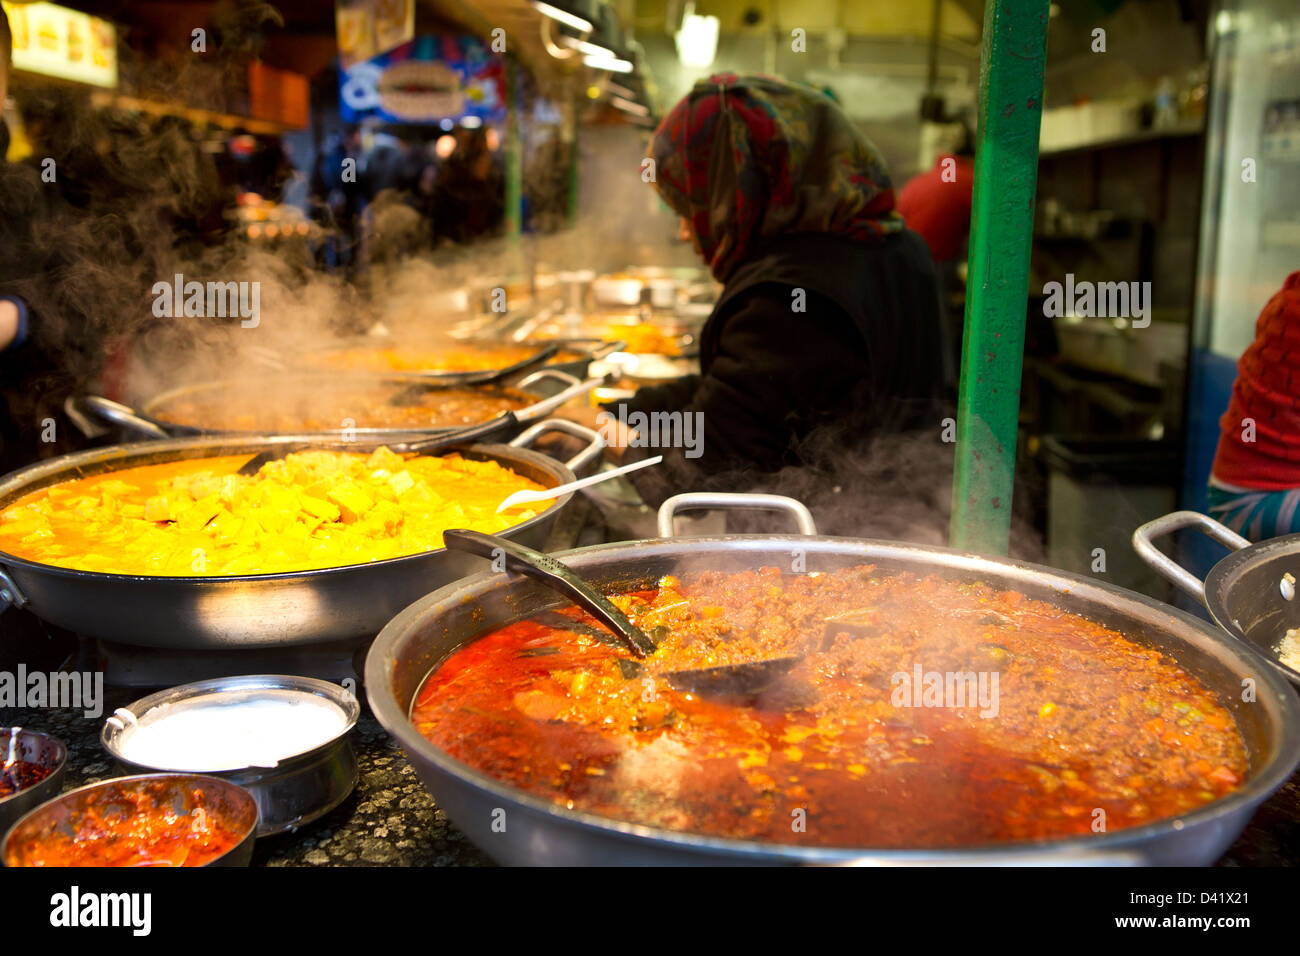 The food stalls in Camden town market. Camden Lock. Stock Photo